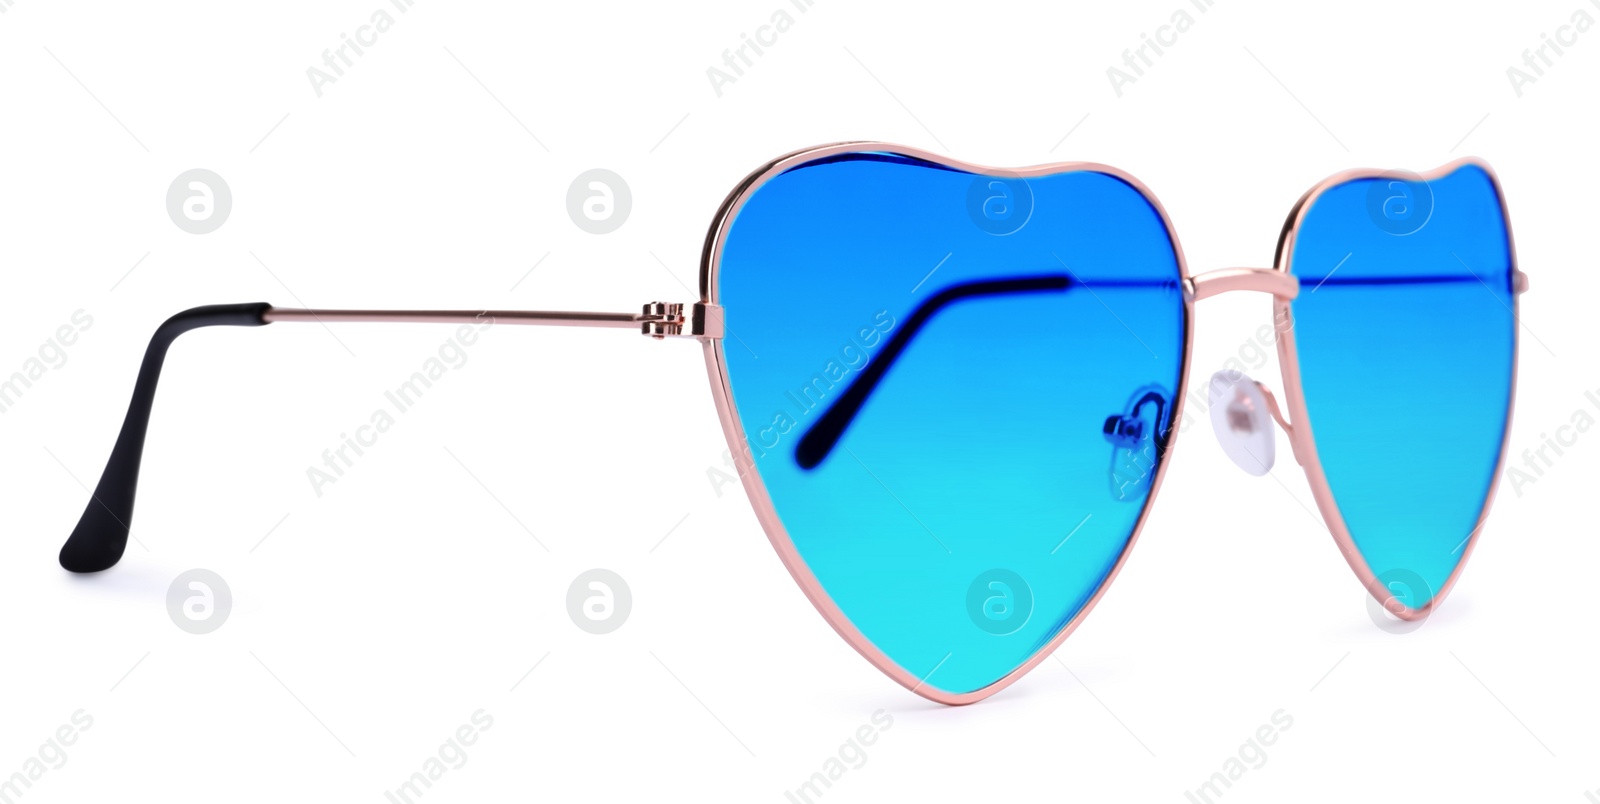 Image of Stylish heart shaped sunglasses with light blue lenses on white background